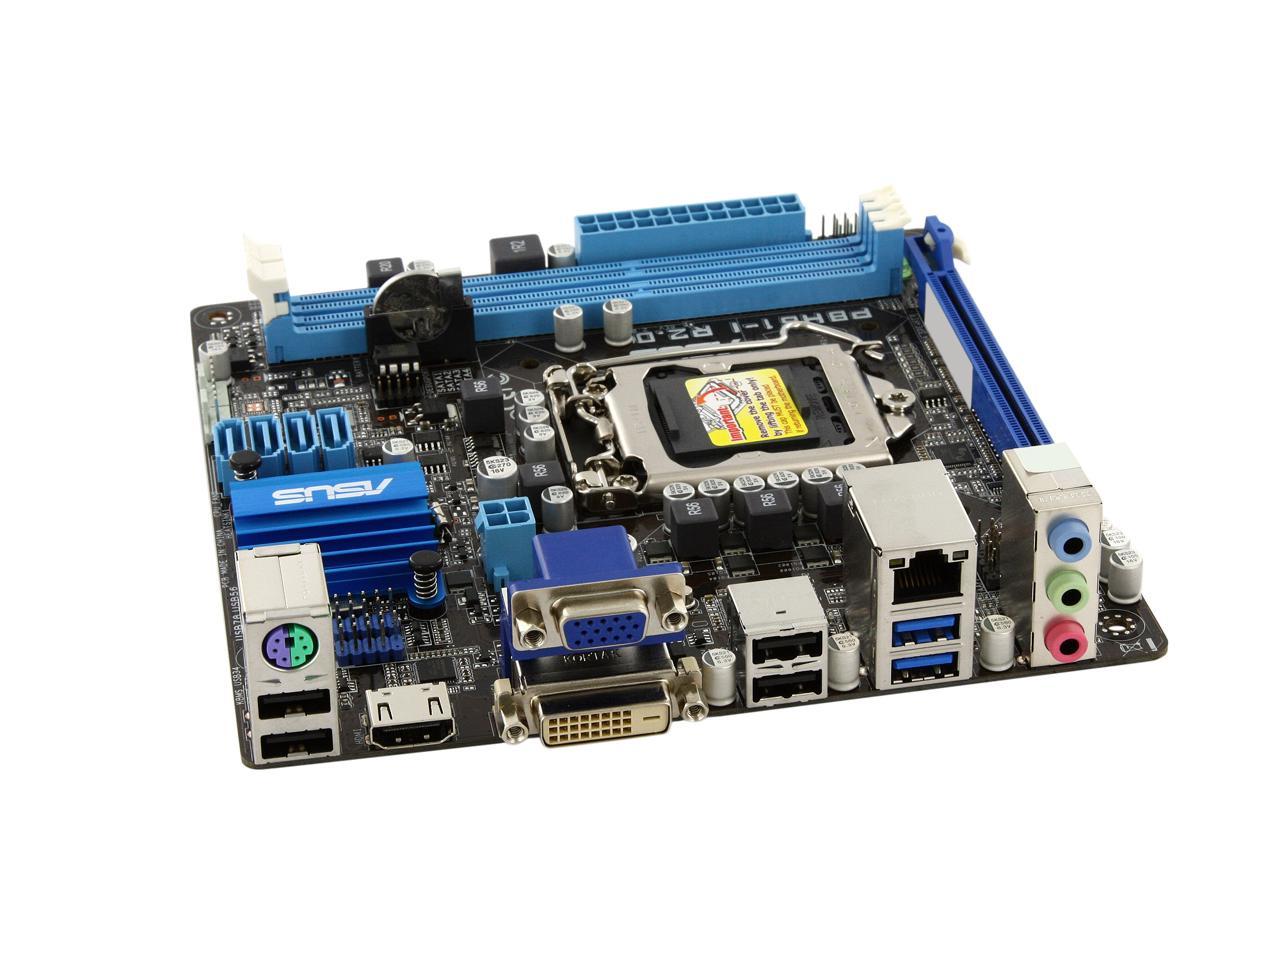 ASUS P8H61-I R2.0 LGA 1155 Intel H61 HDMI USB 3.0 Mini ITX Intel  Motherboard with UEFI BIOS